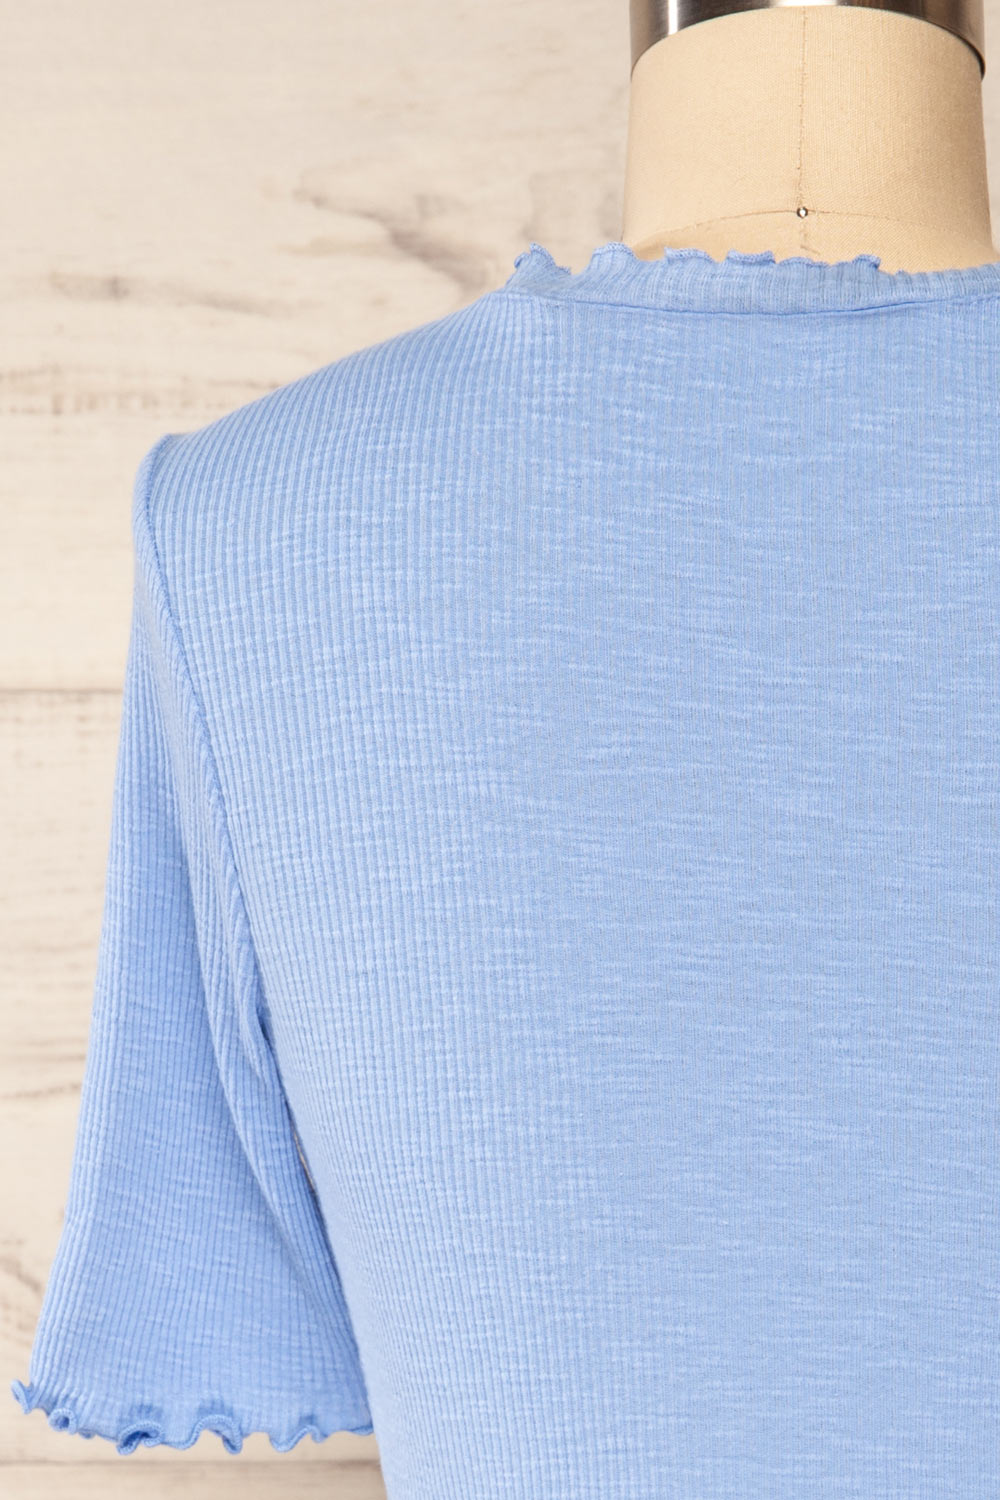 Pronoia Blue Ribbed Crop Top w/ Short Sleeves | La petite garçonne back close up